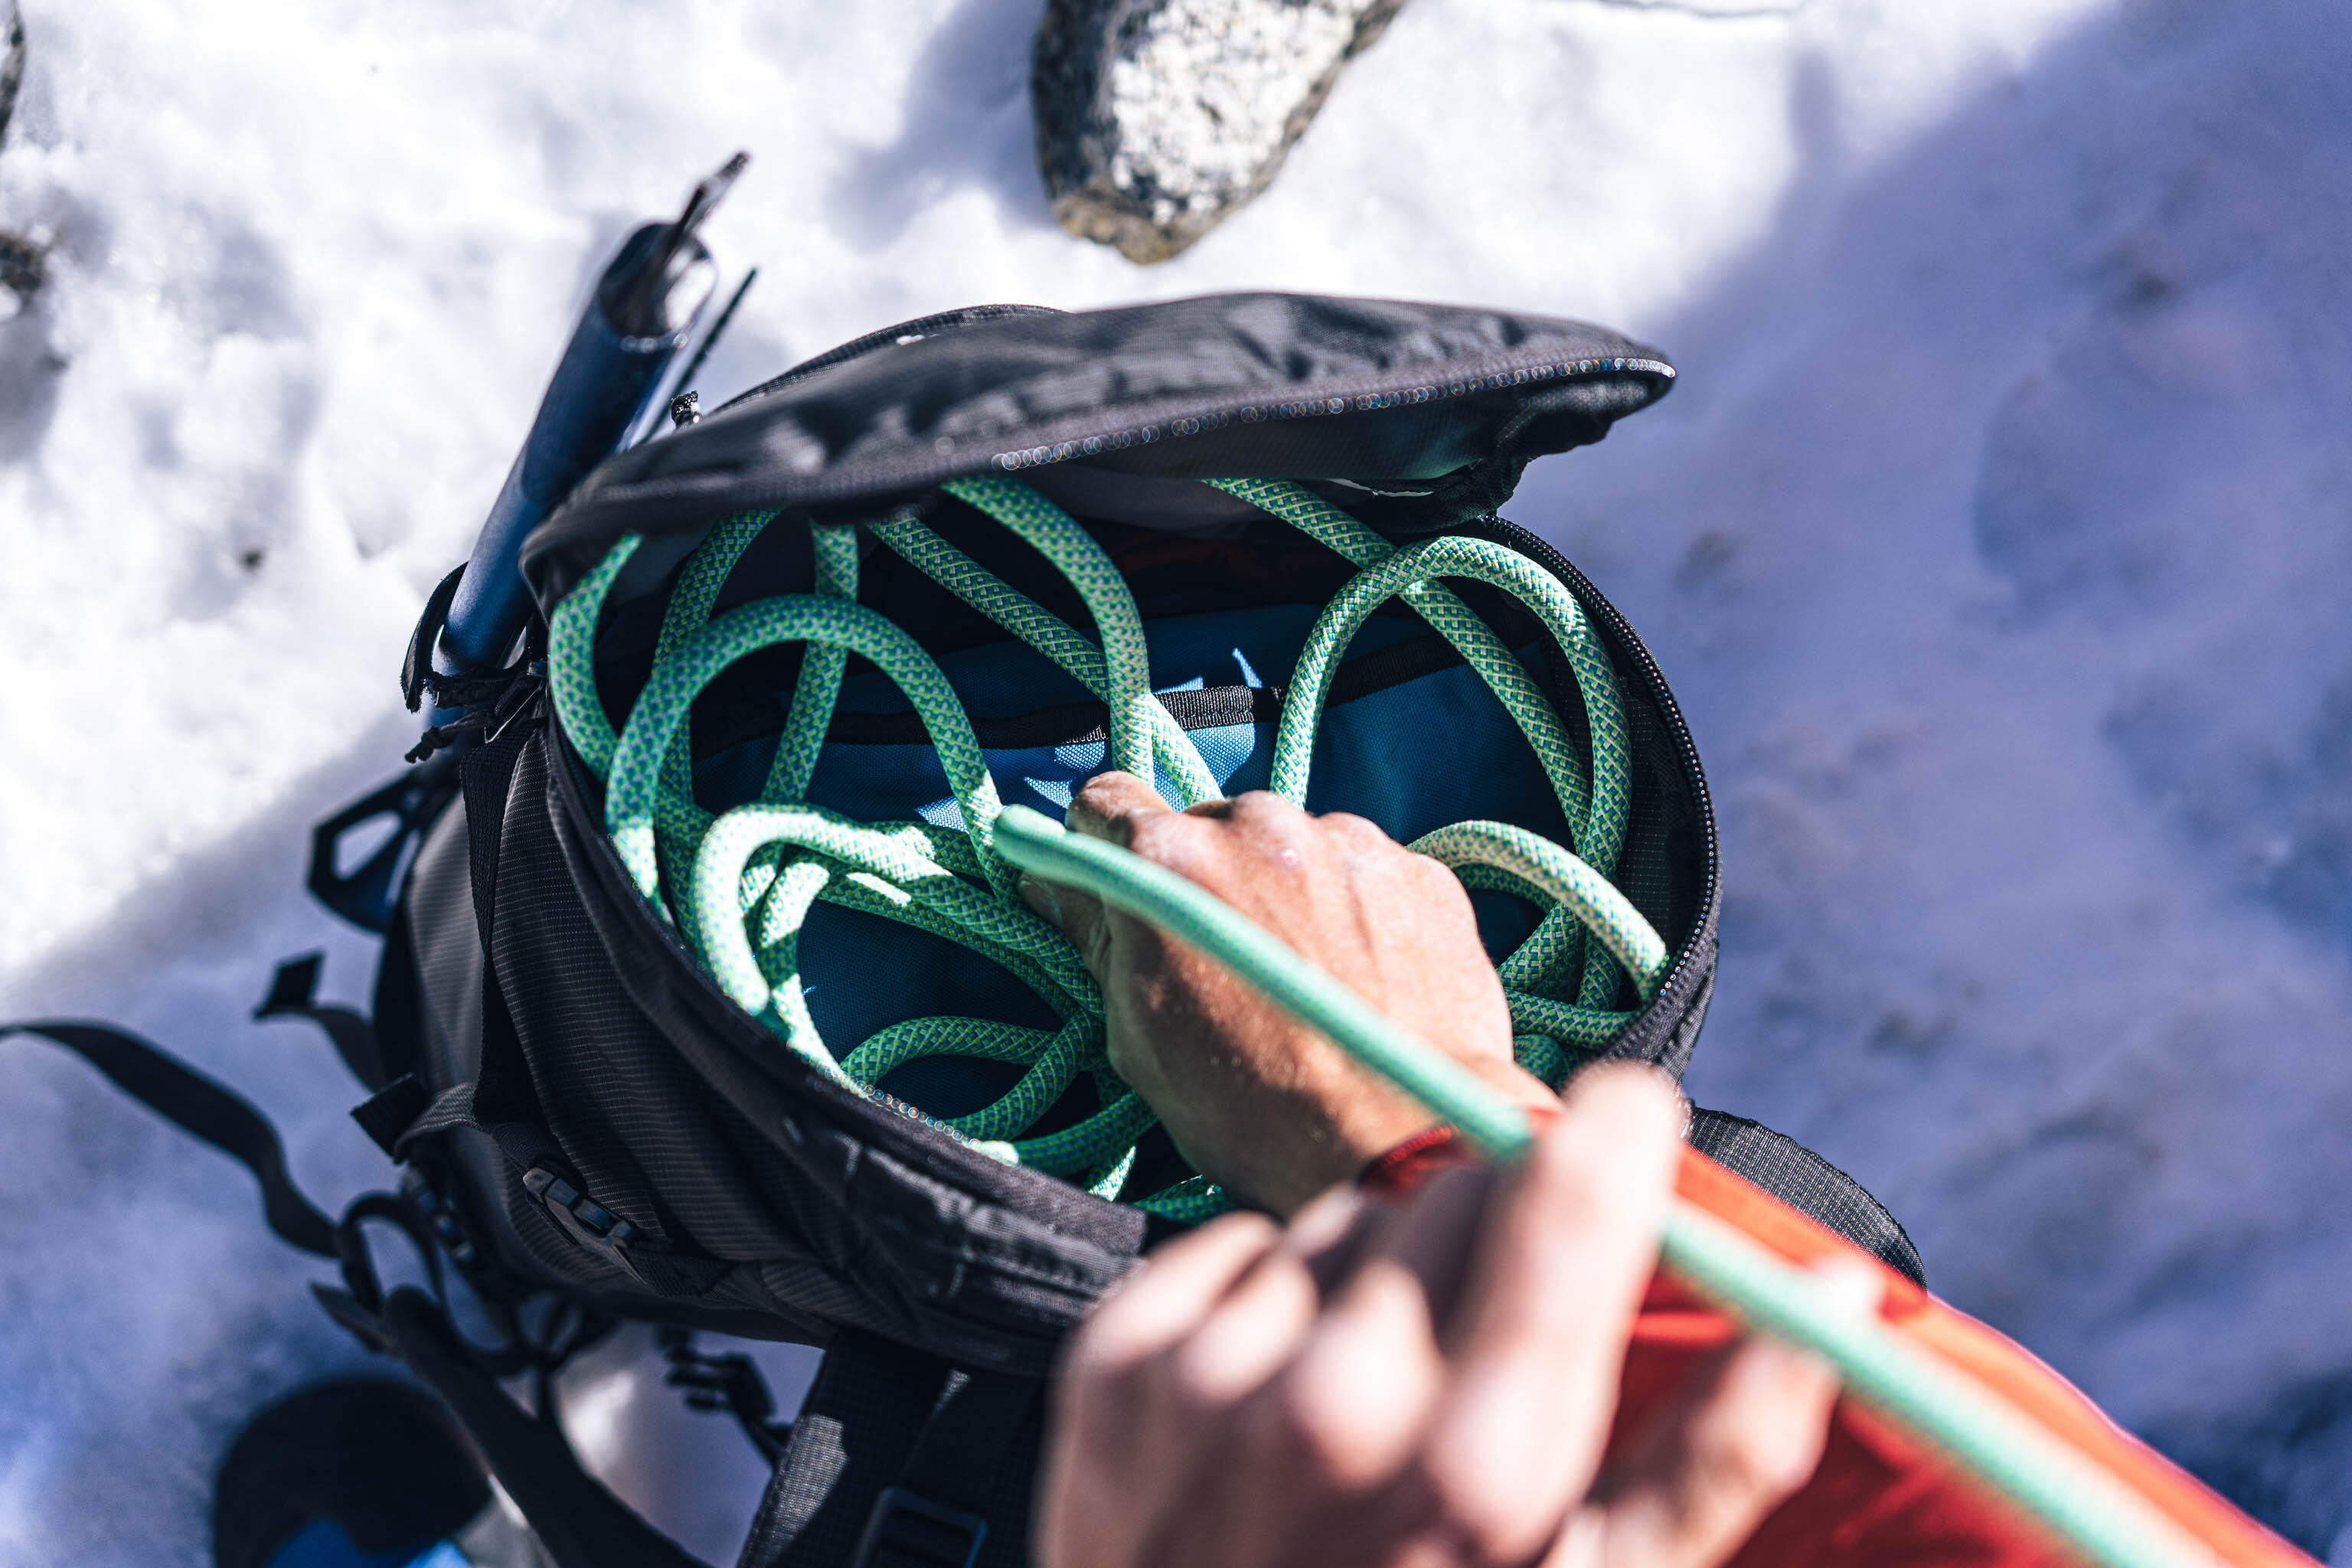 Mountaineering Backpack - Alpinism 22 Black - SIMOND